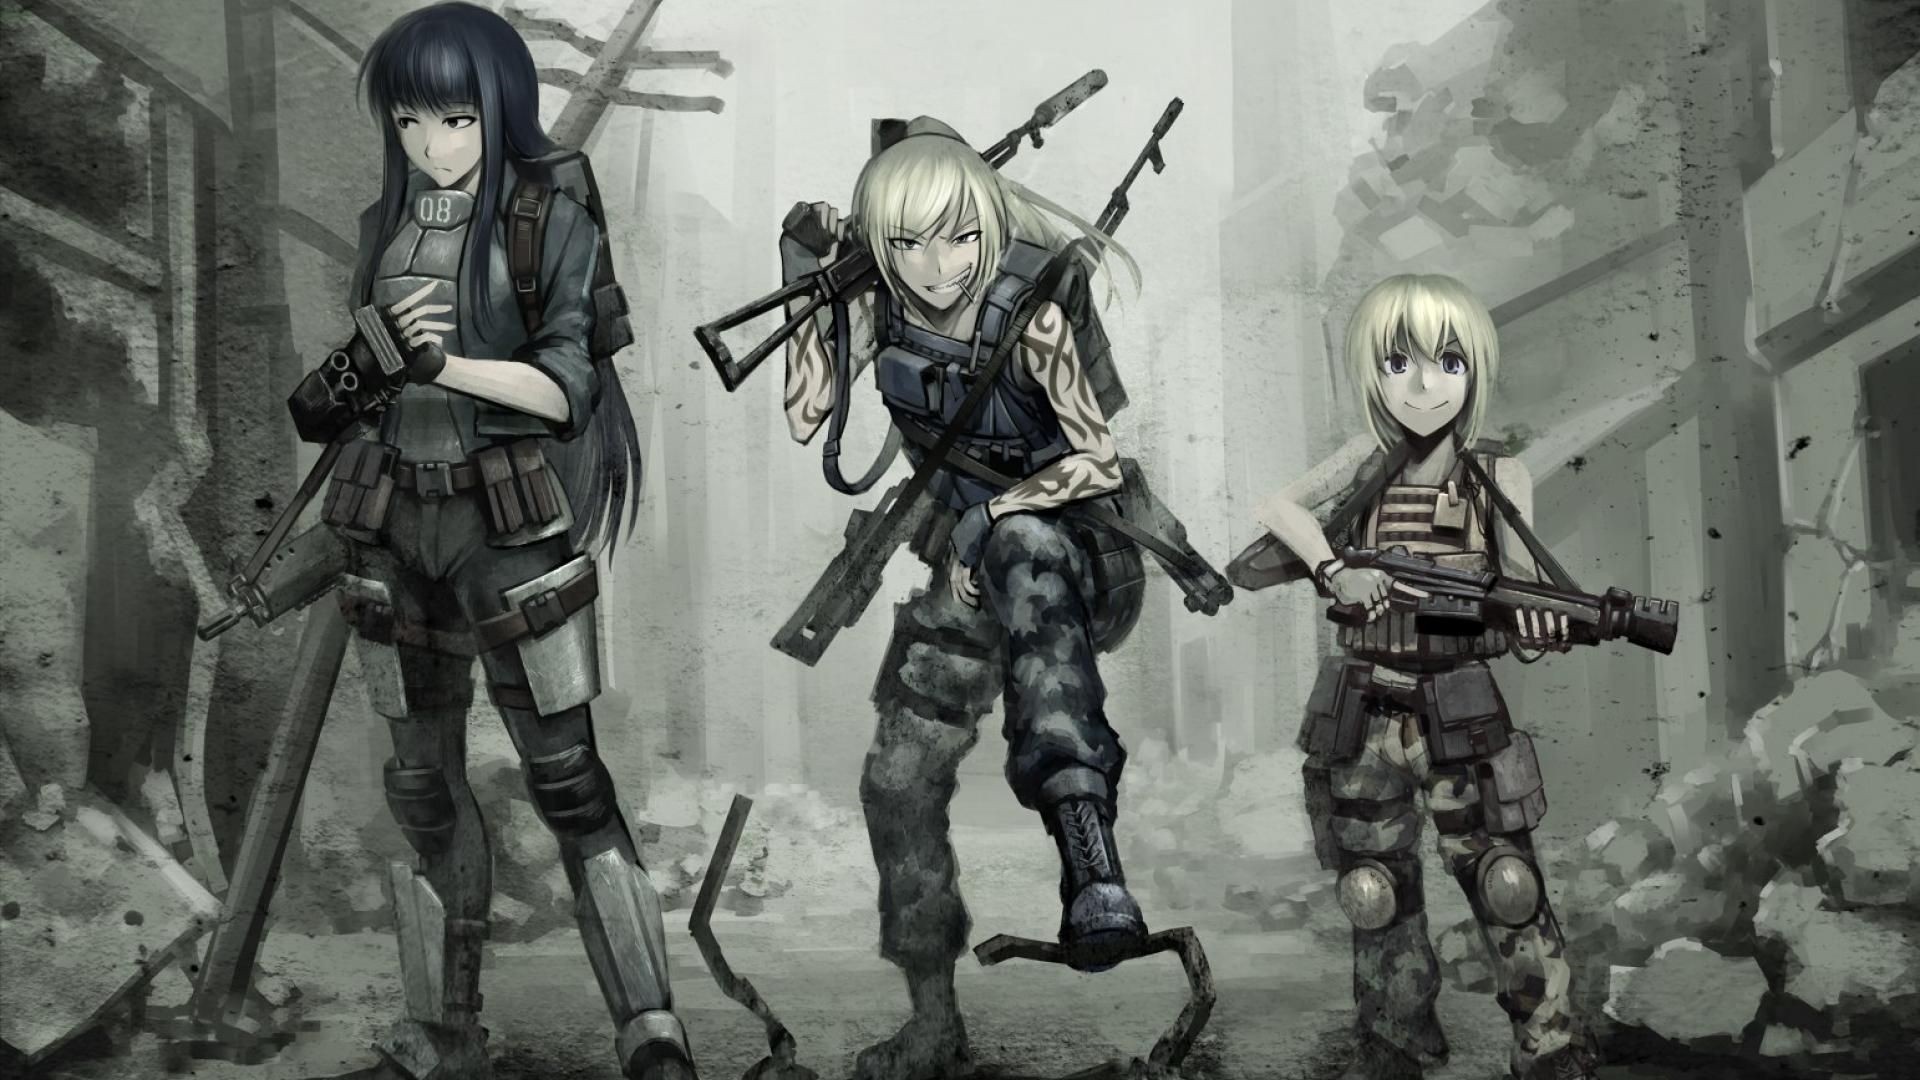 Anime Girls With Guns Wallpaper Free Download